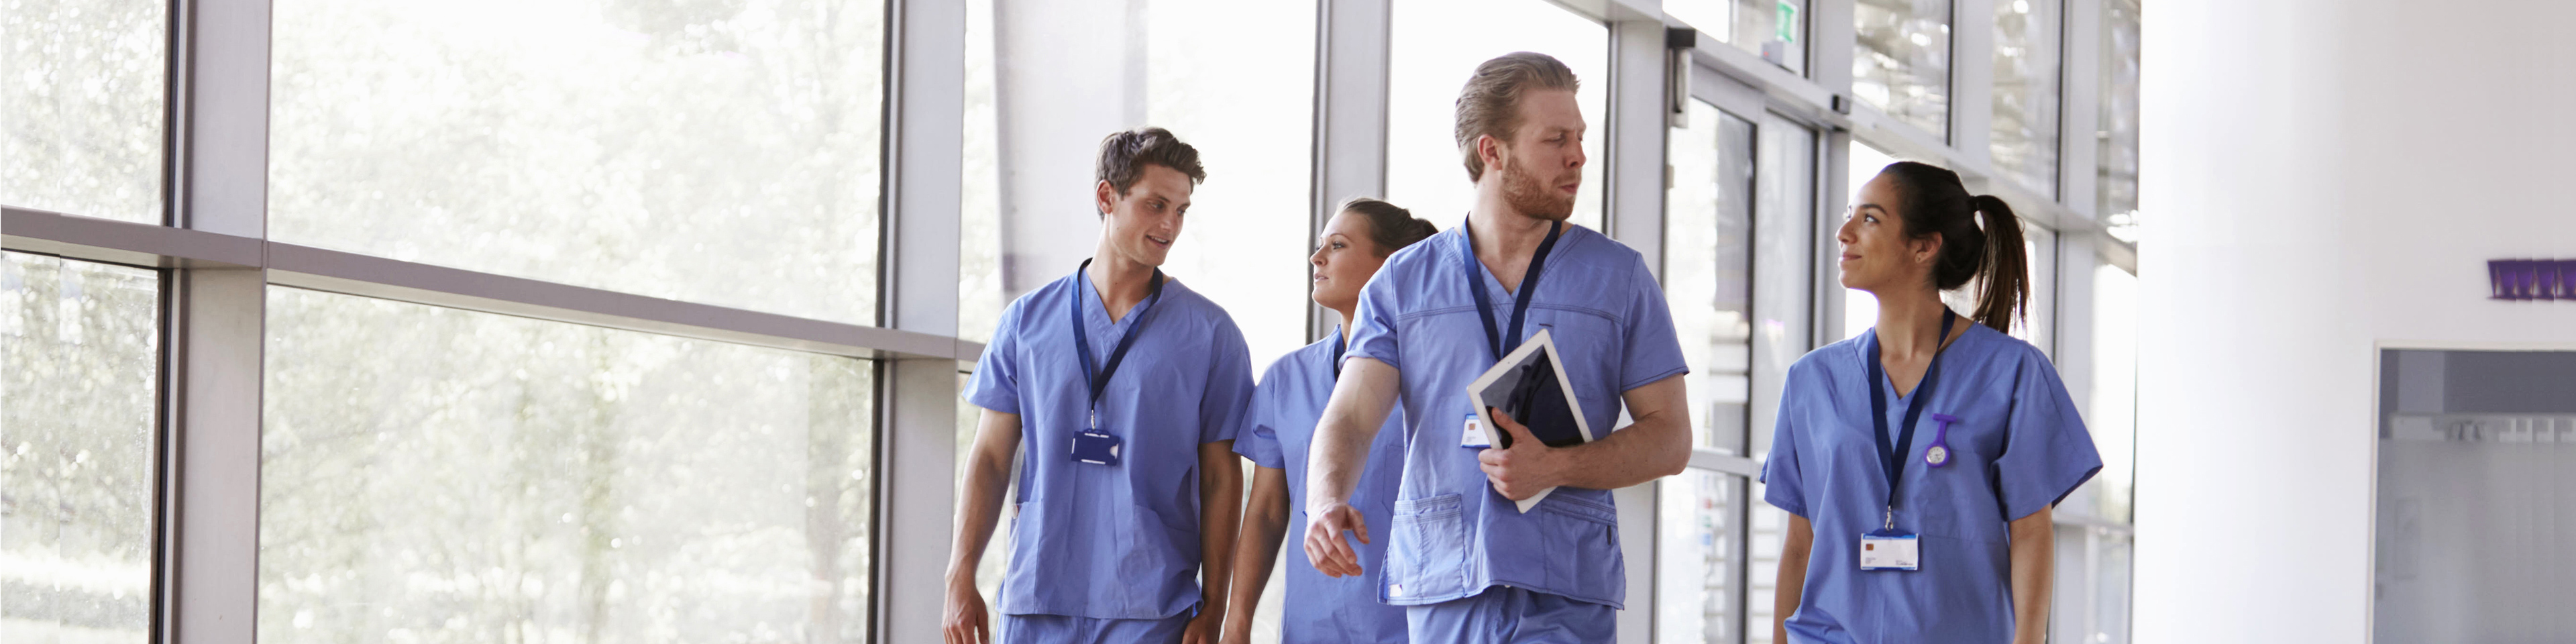 Four healthcare workers in scrubs walking in corridor